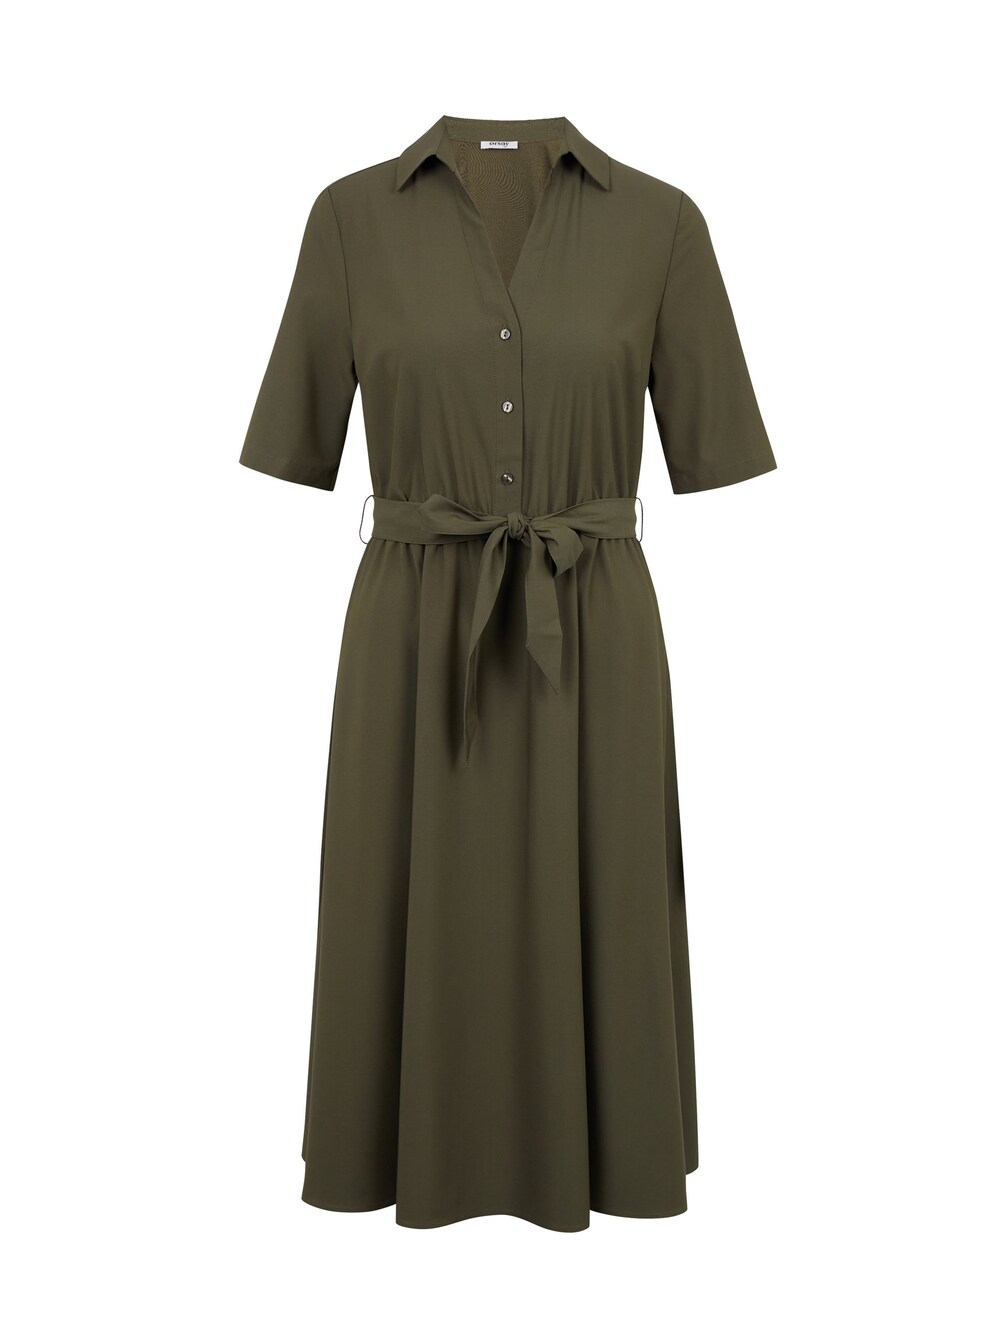 Рубашка-платье Orsay, оливковый